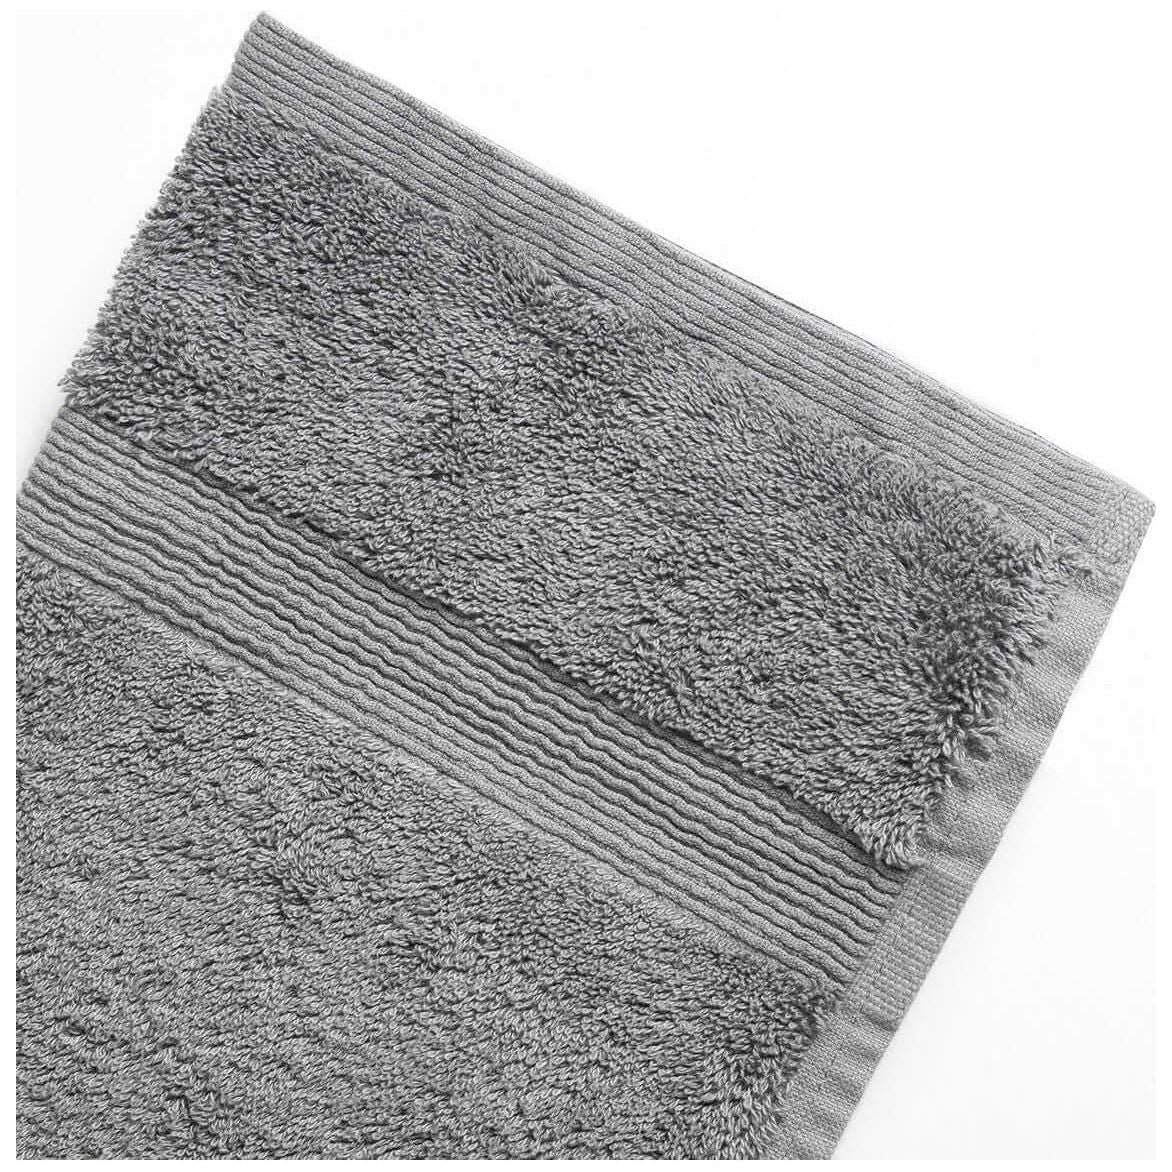 Nebia Hand Towel - top view in color grey